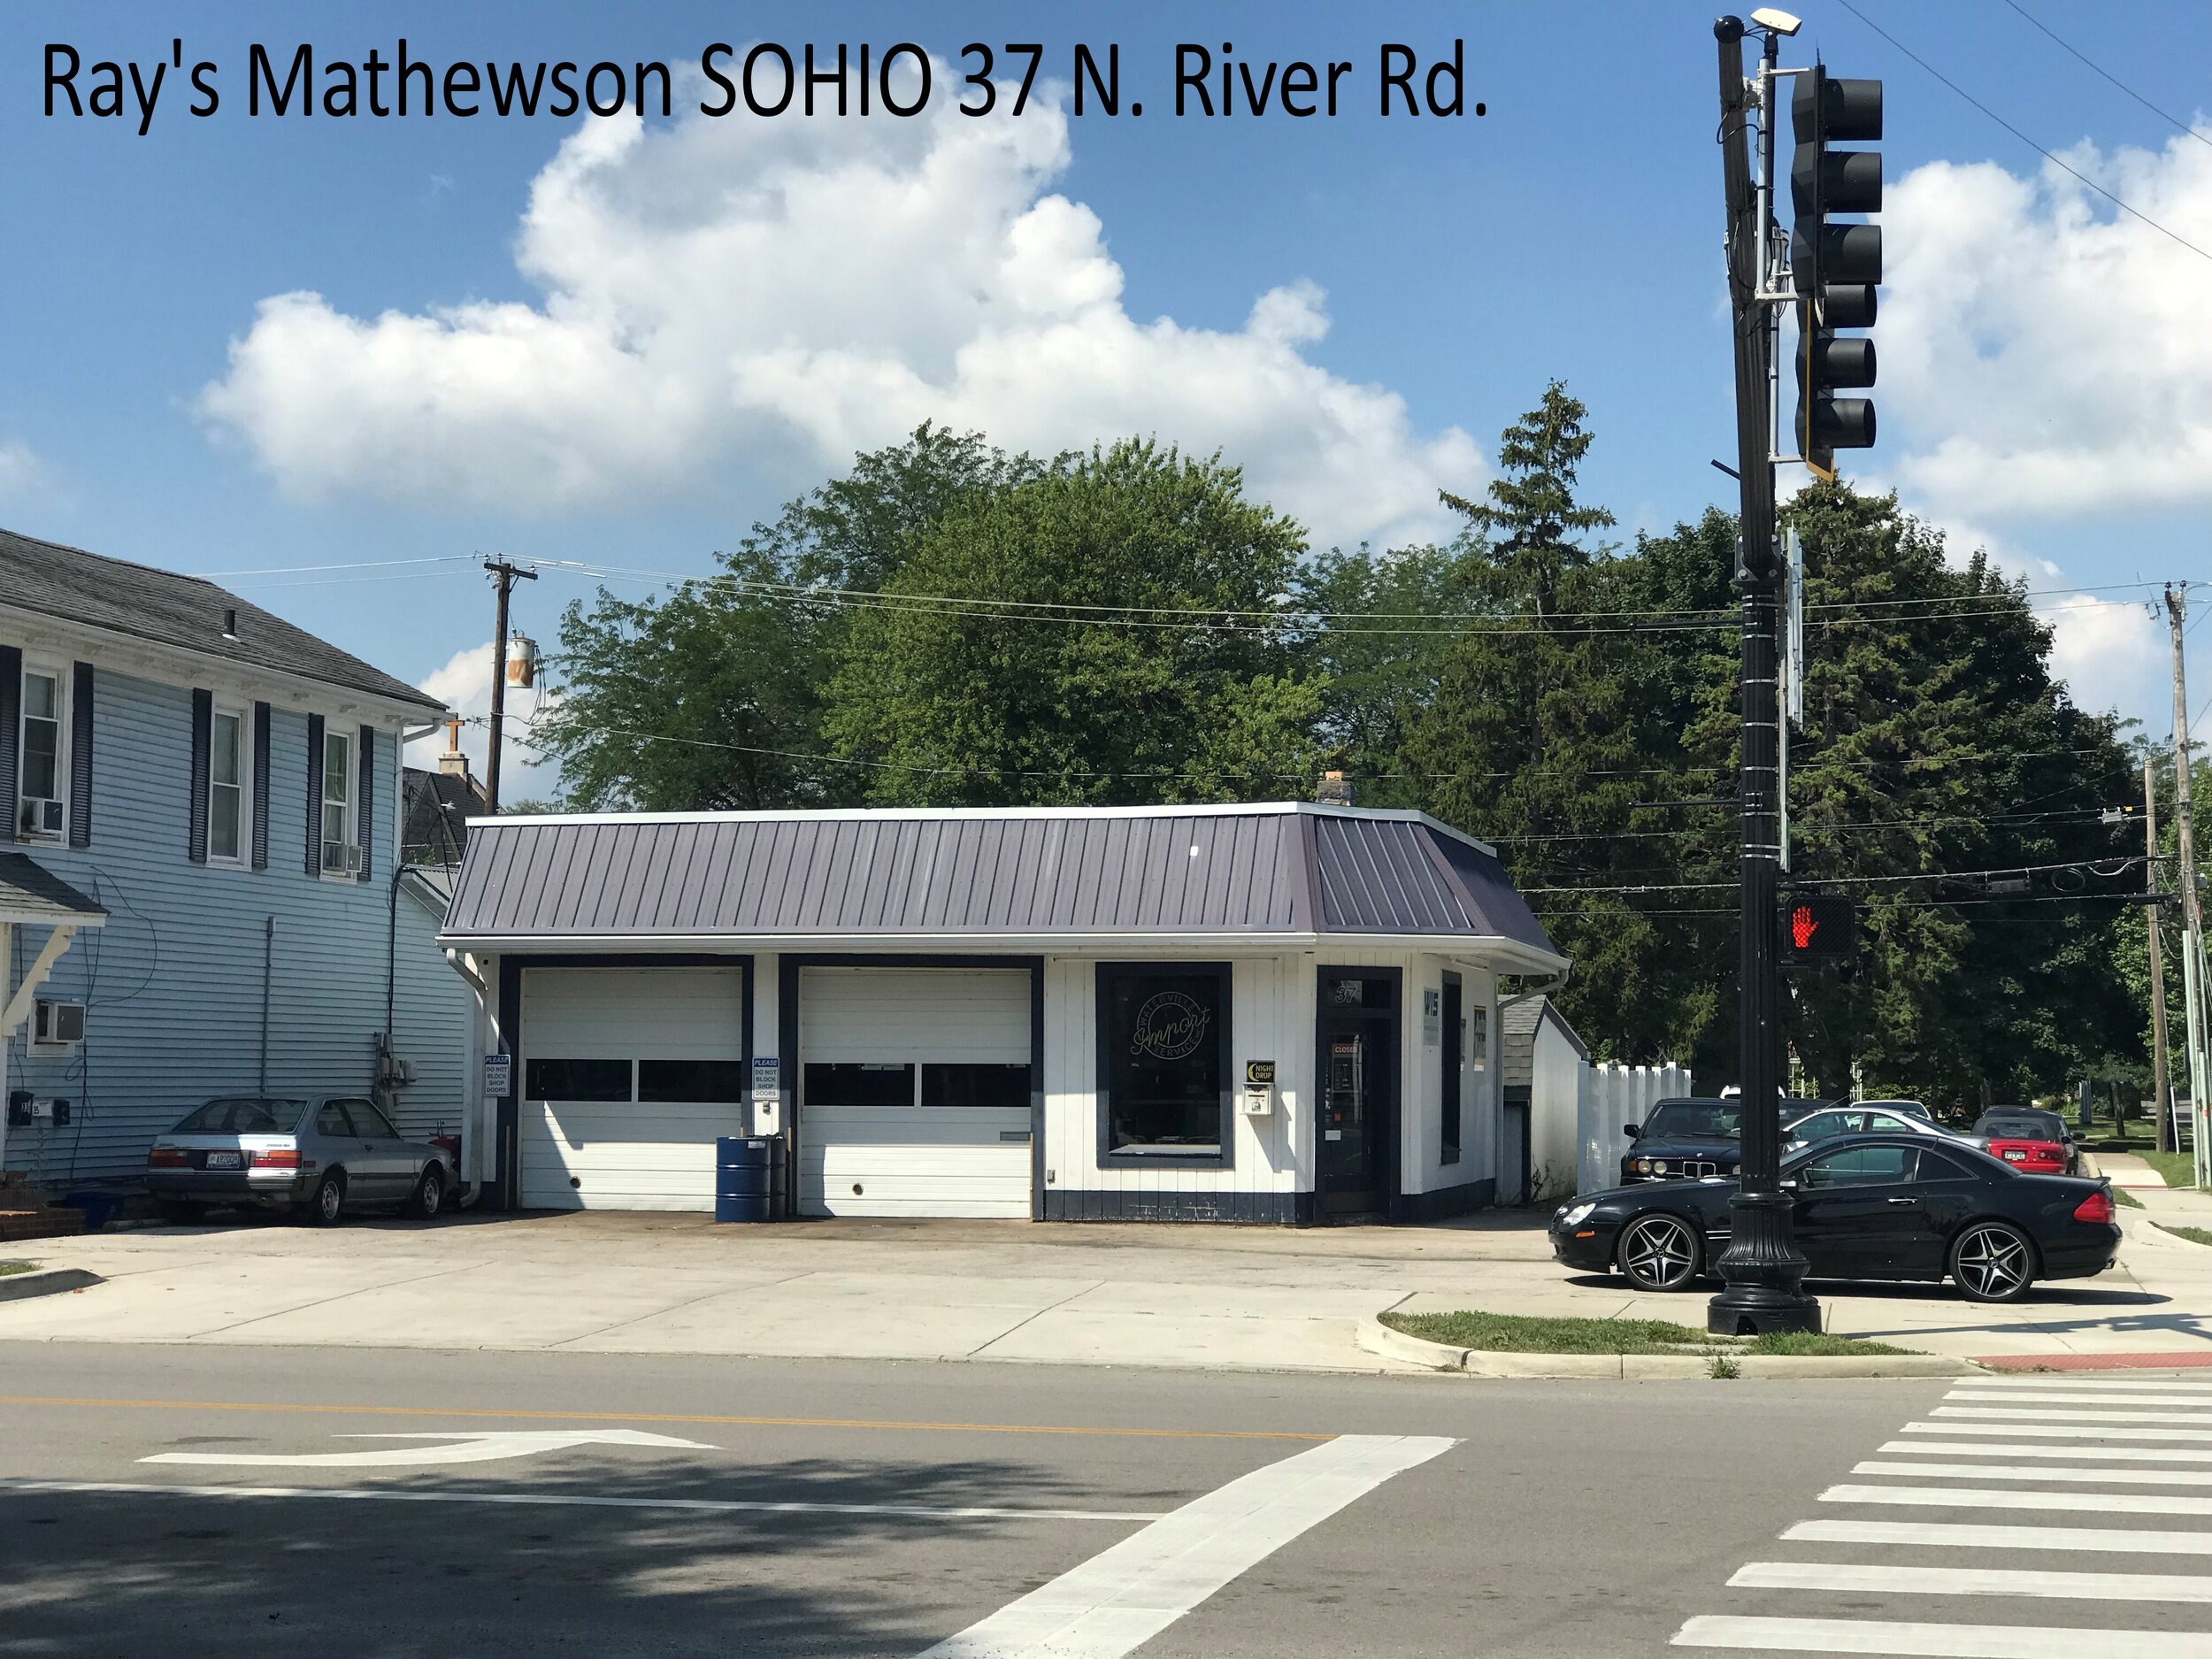 Ray's Mathewson SOHIO 37 N. River Rd..JPG